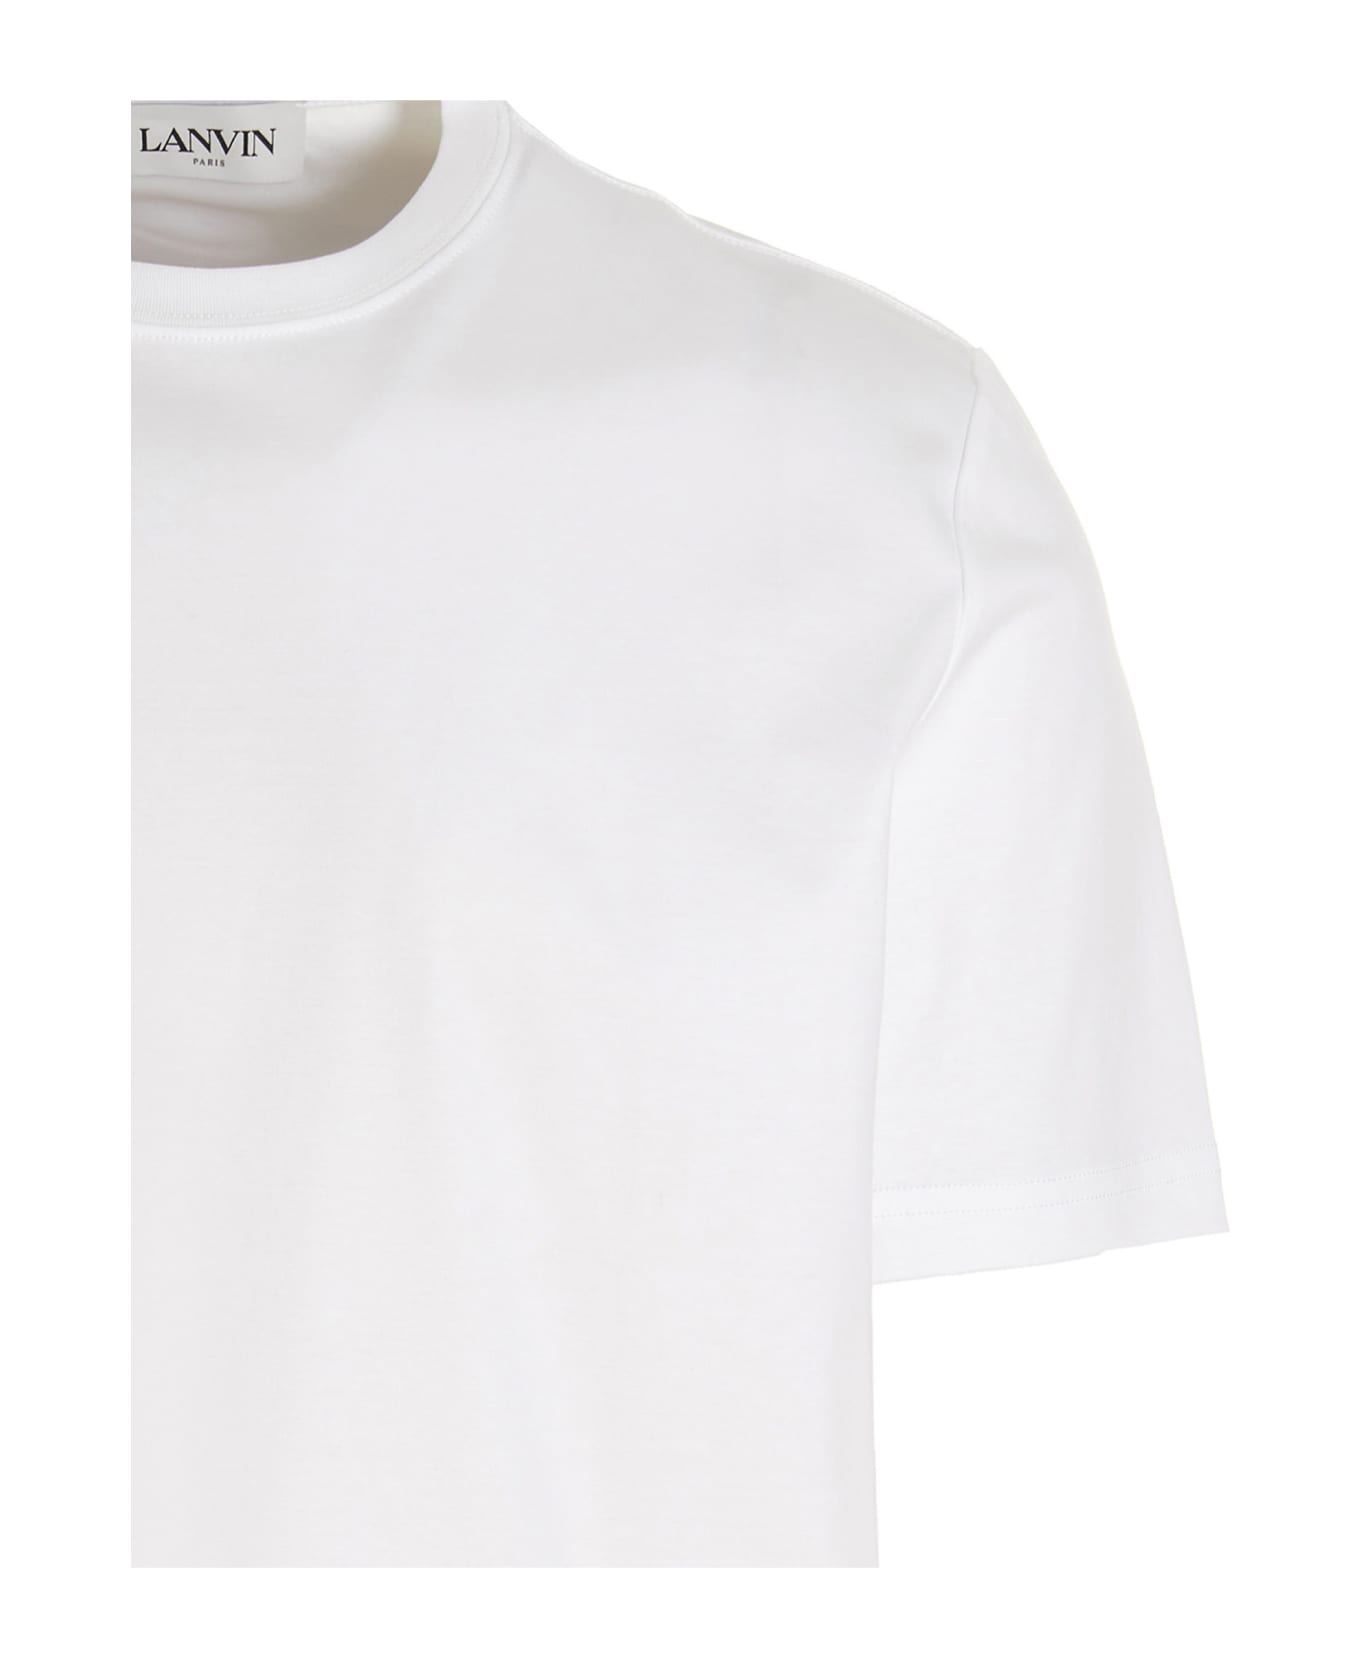 Lanvin Retro-style Print T-shirt - White